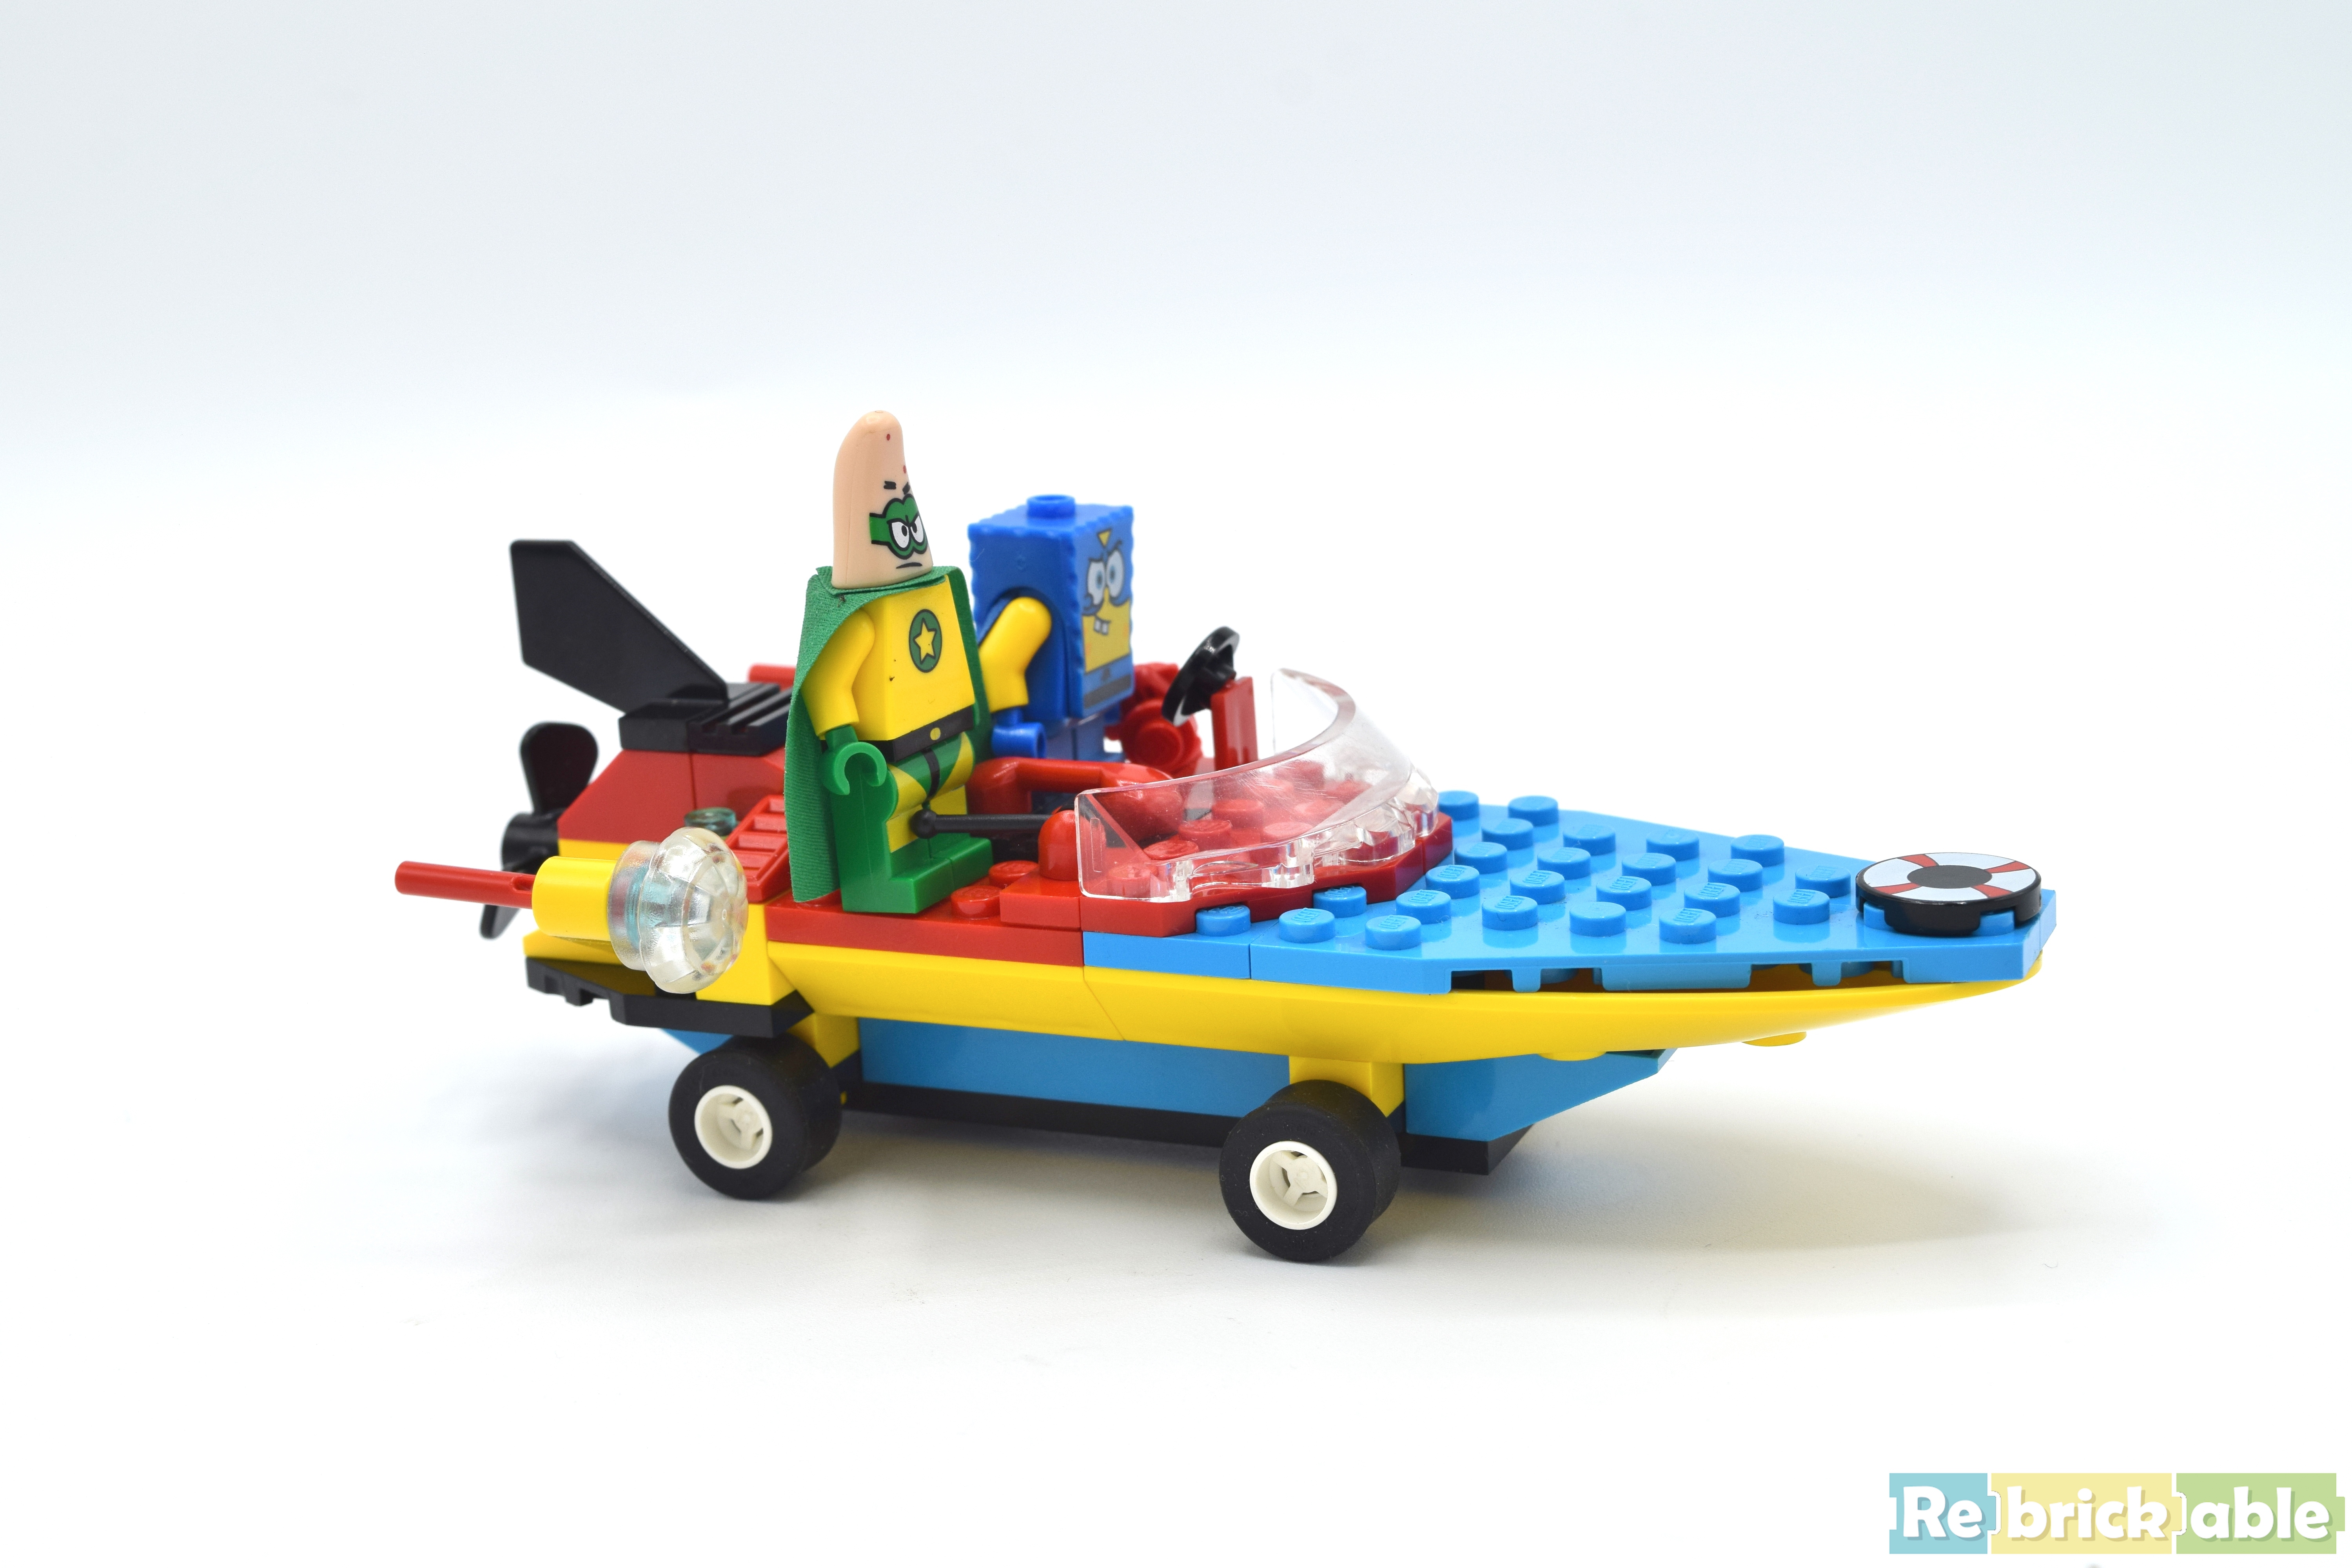 LEGO 3815 SPONGEBOB "HEROES OF THE DEEP" INSTRUCTION MANUAL NO BRICKS